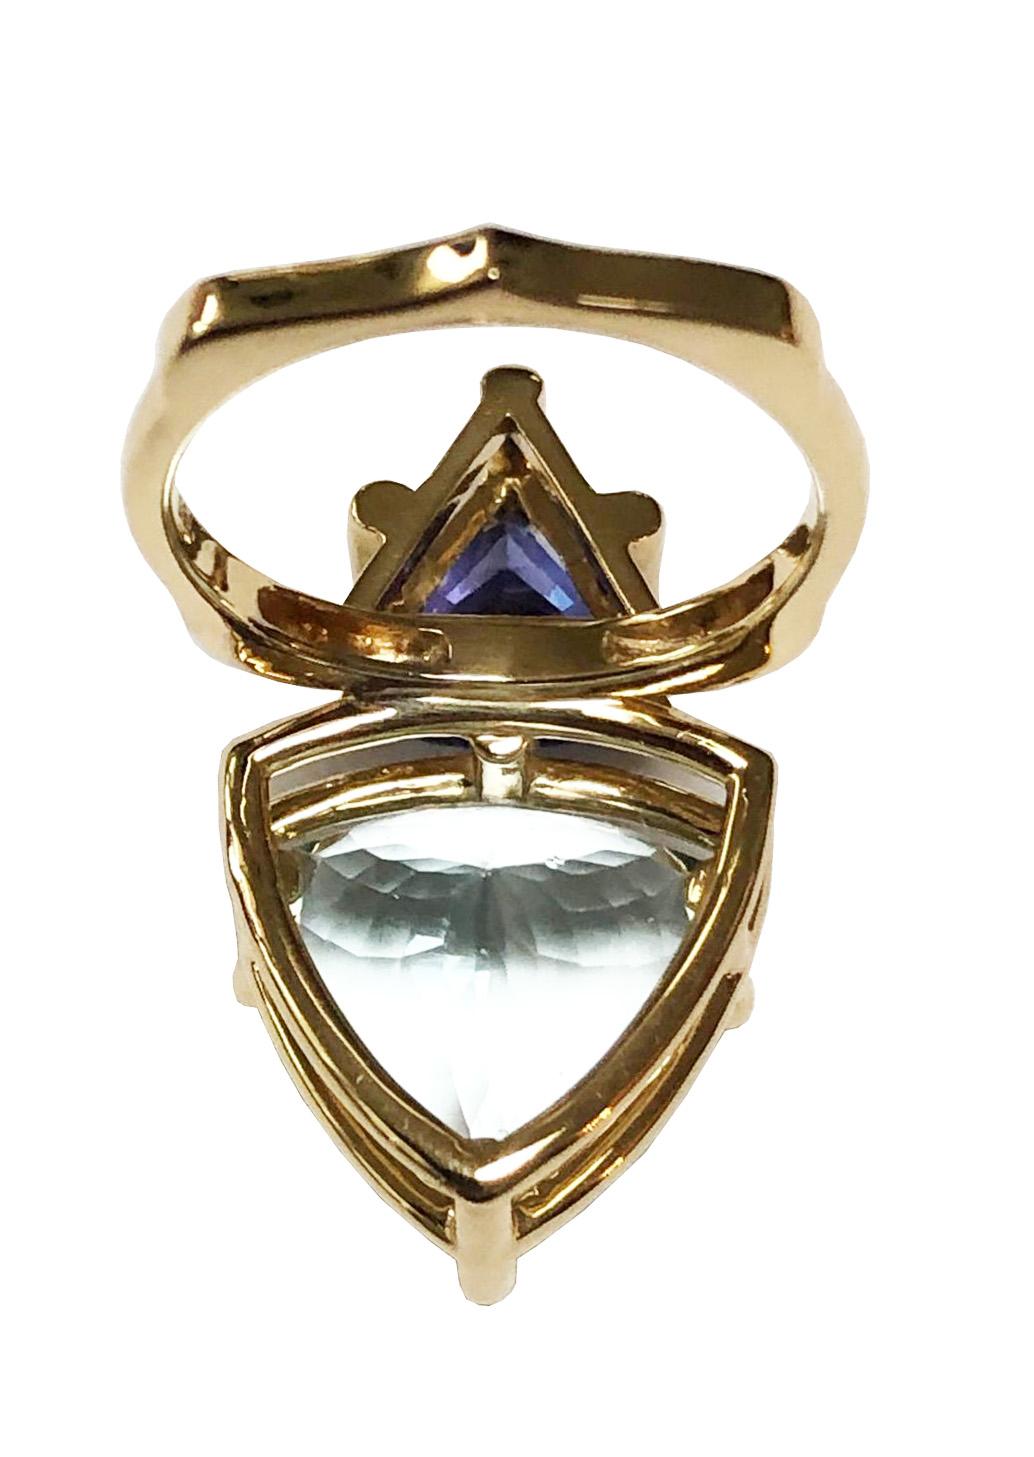 aquamarine rose gold engagement ring